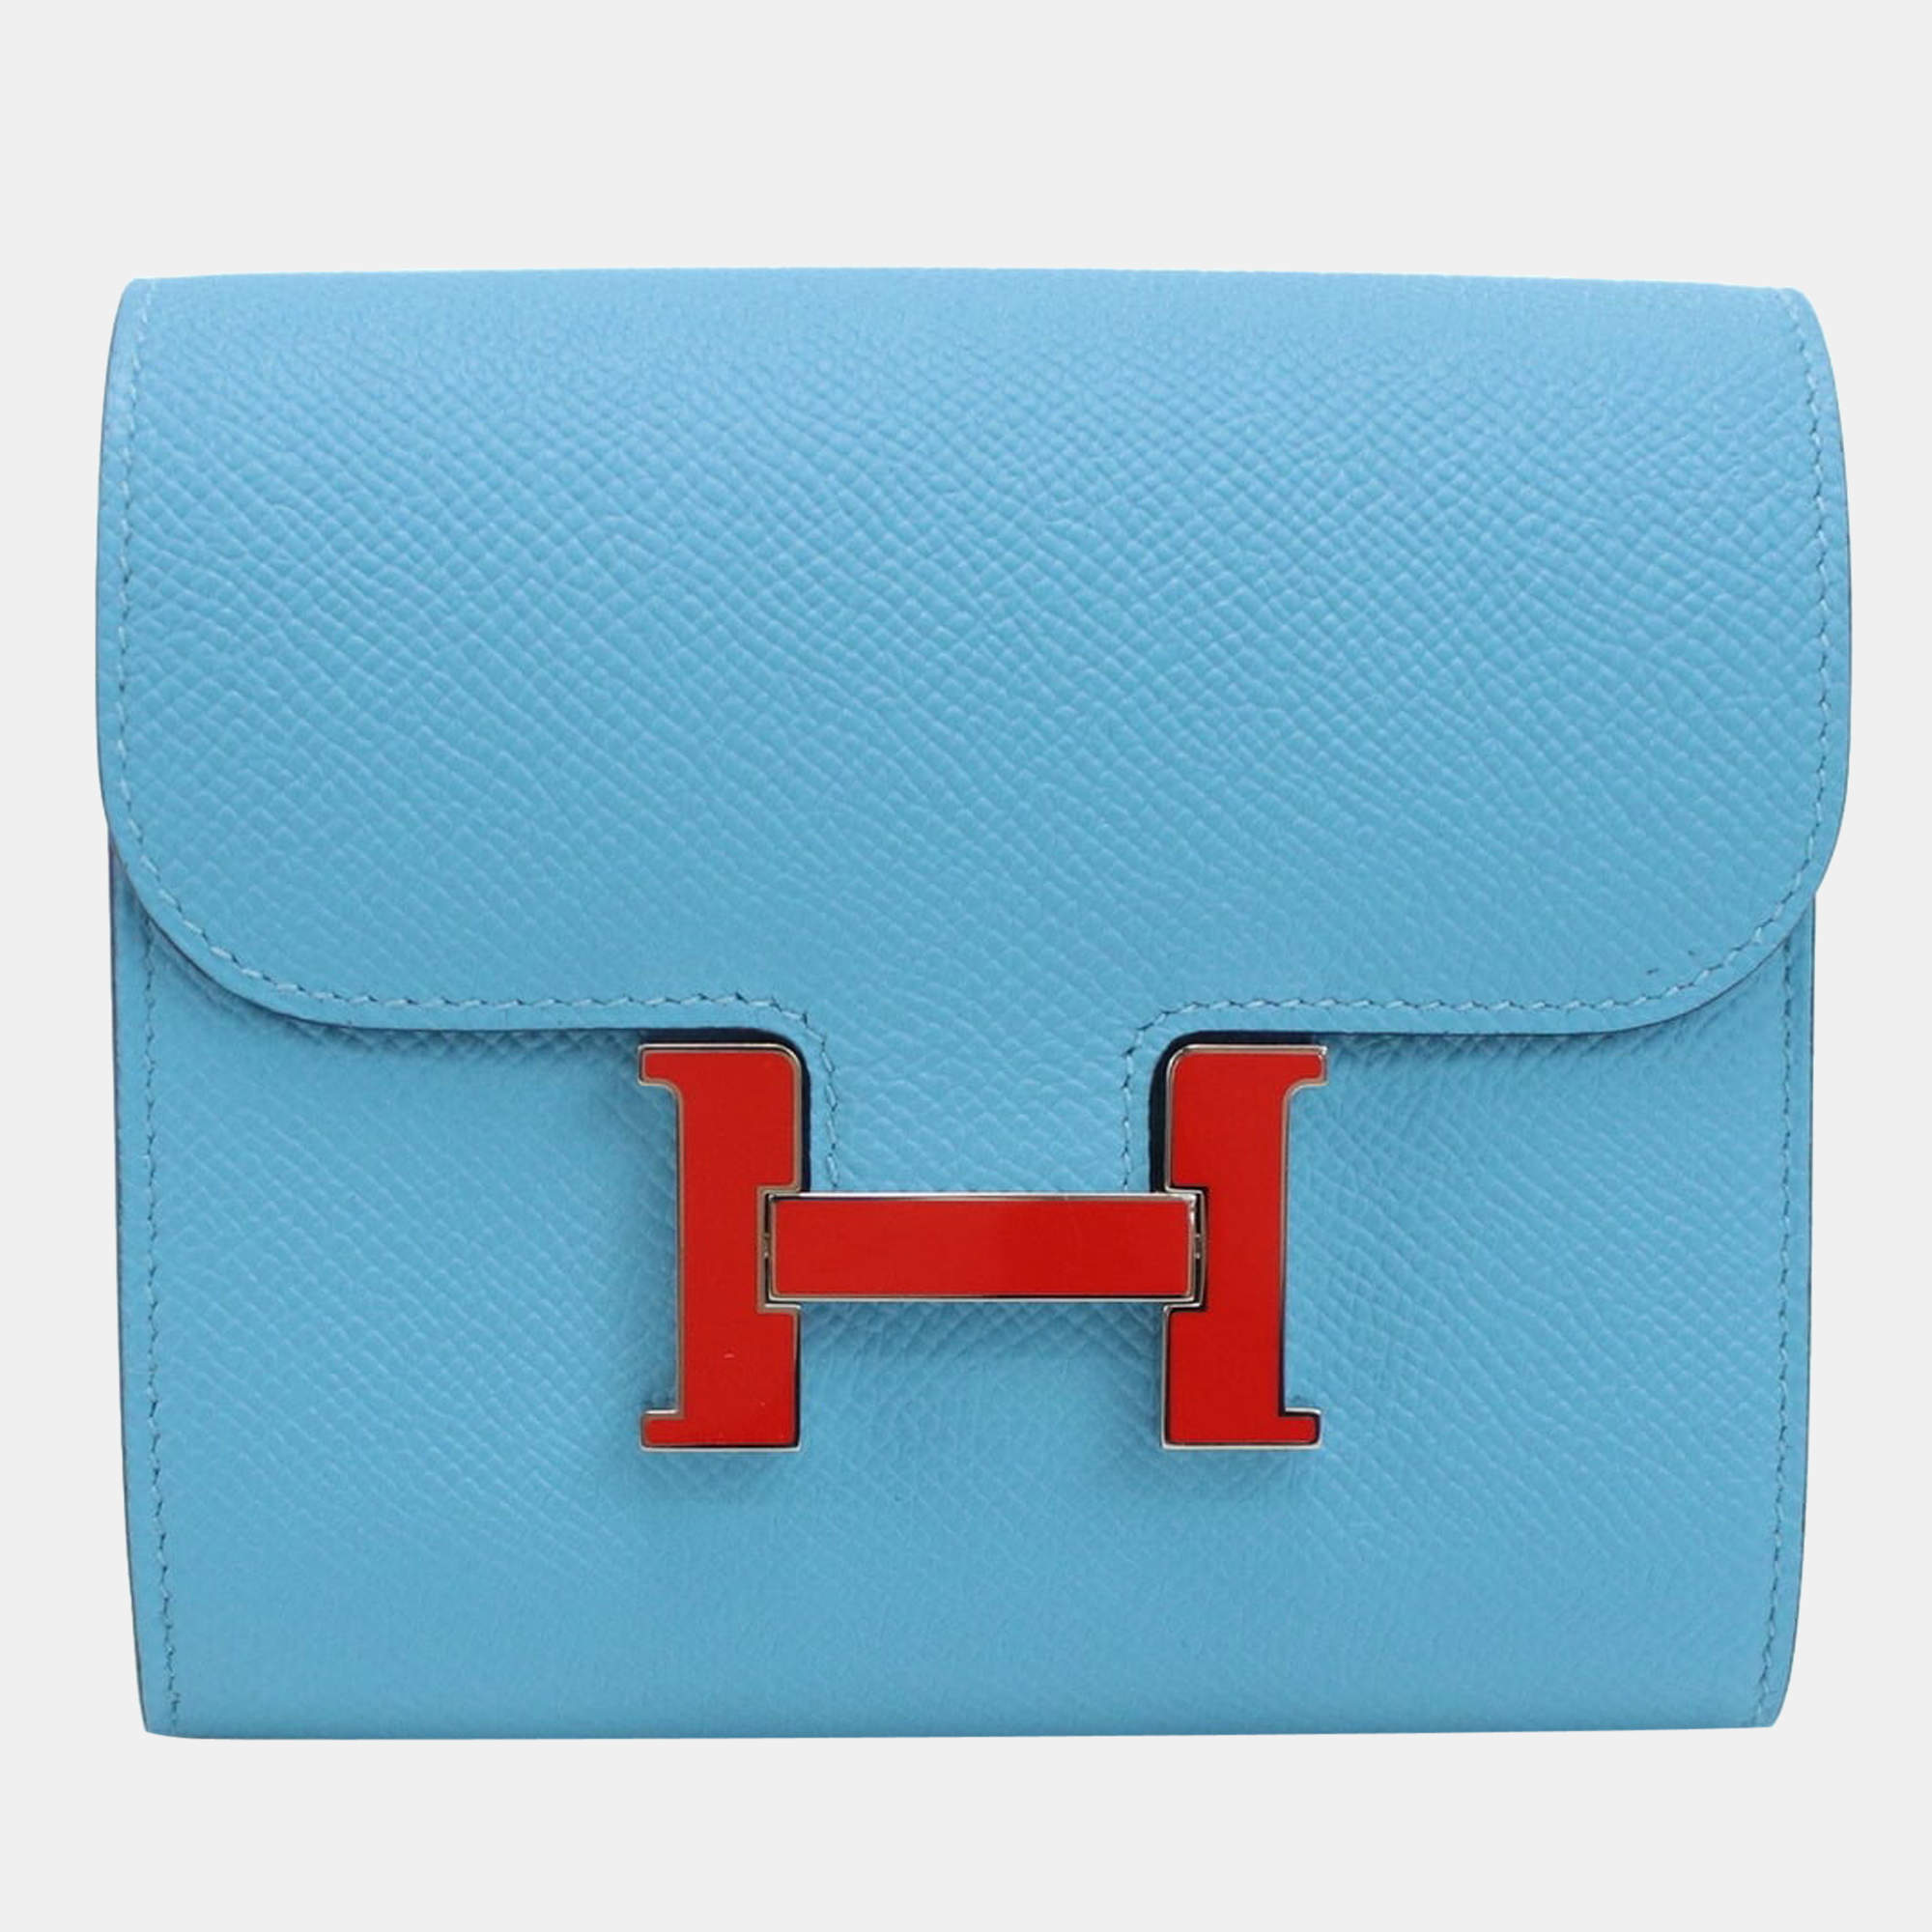 Hermès Constance Compact Wallet - Blue Wallets, Accessories - HER563632